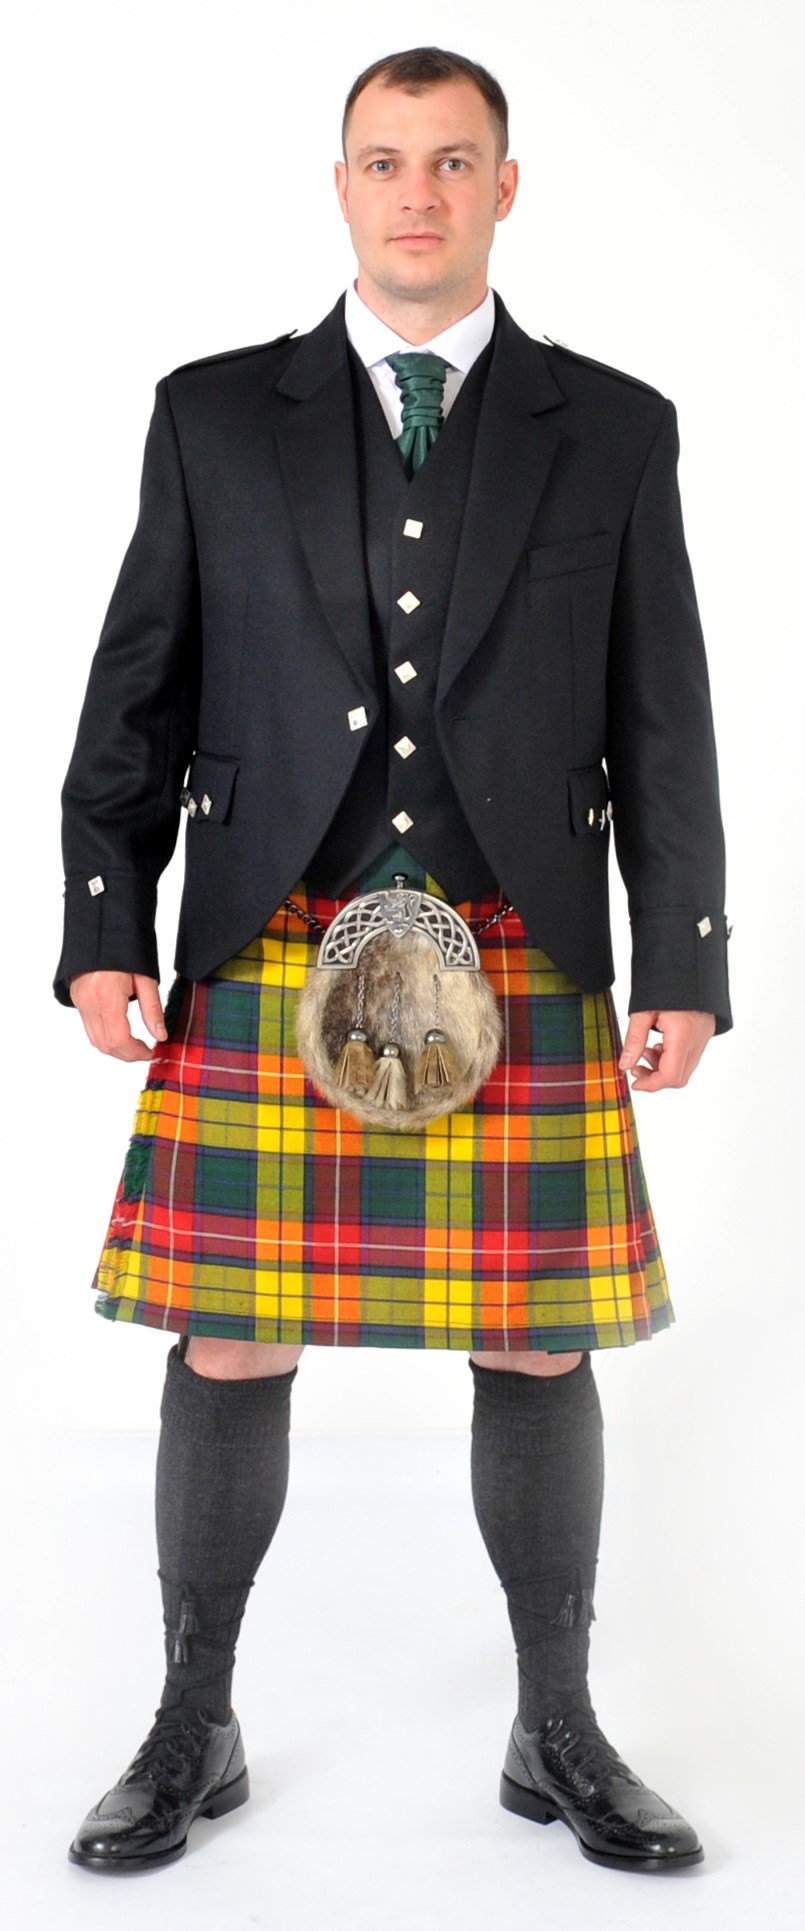 Scottish 8 Yard Buchanan Tartan Kilt Outfit - Scottish Kilt Collection